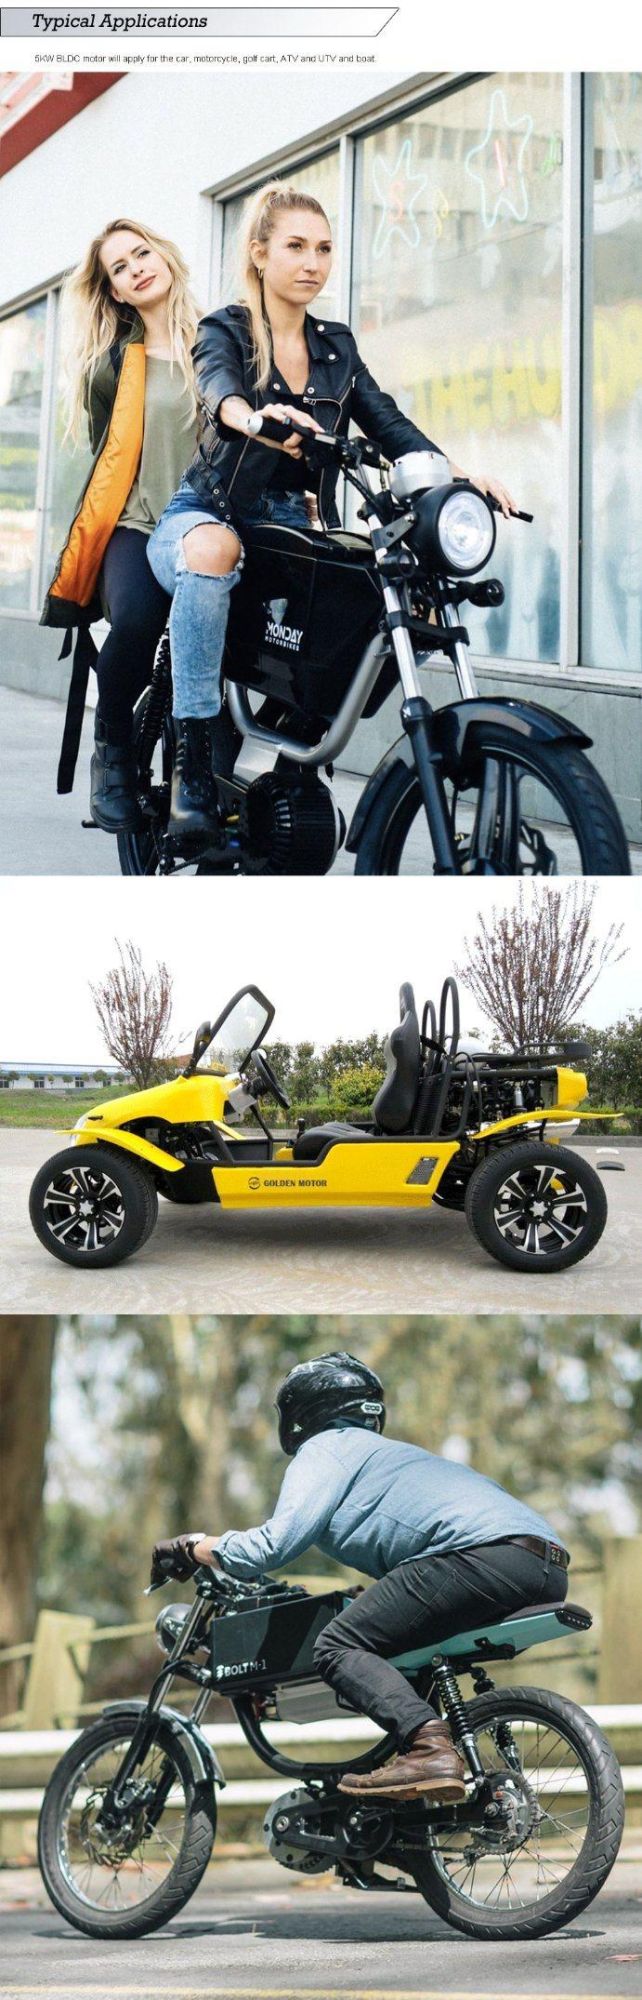 Golden Motor 5kw Electric Motorcycle Conversion Kit